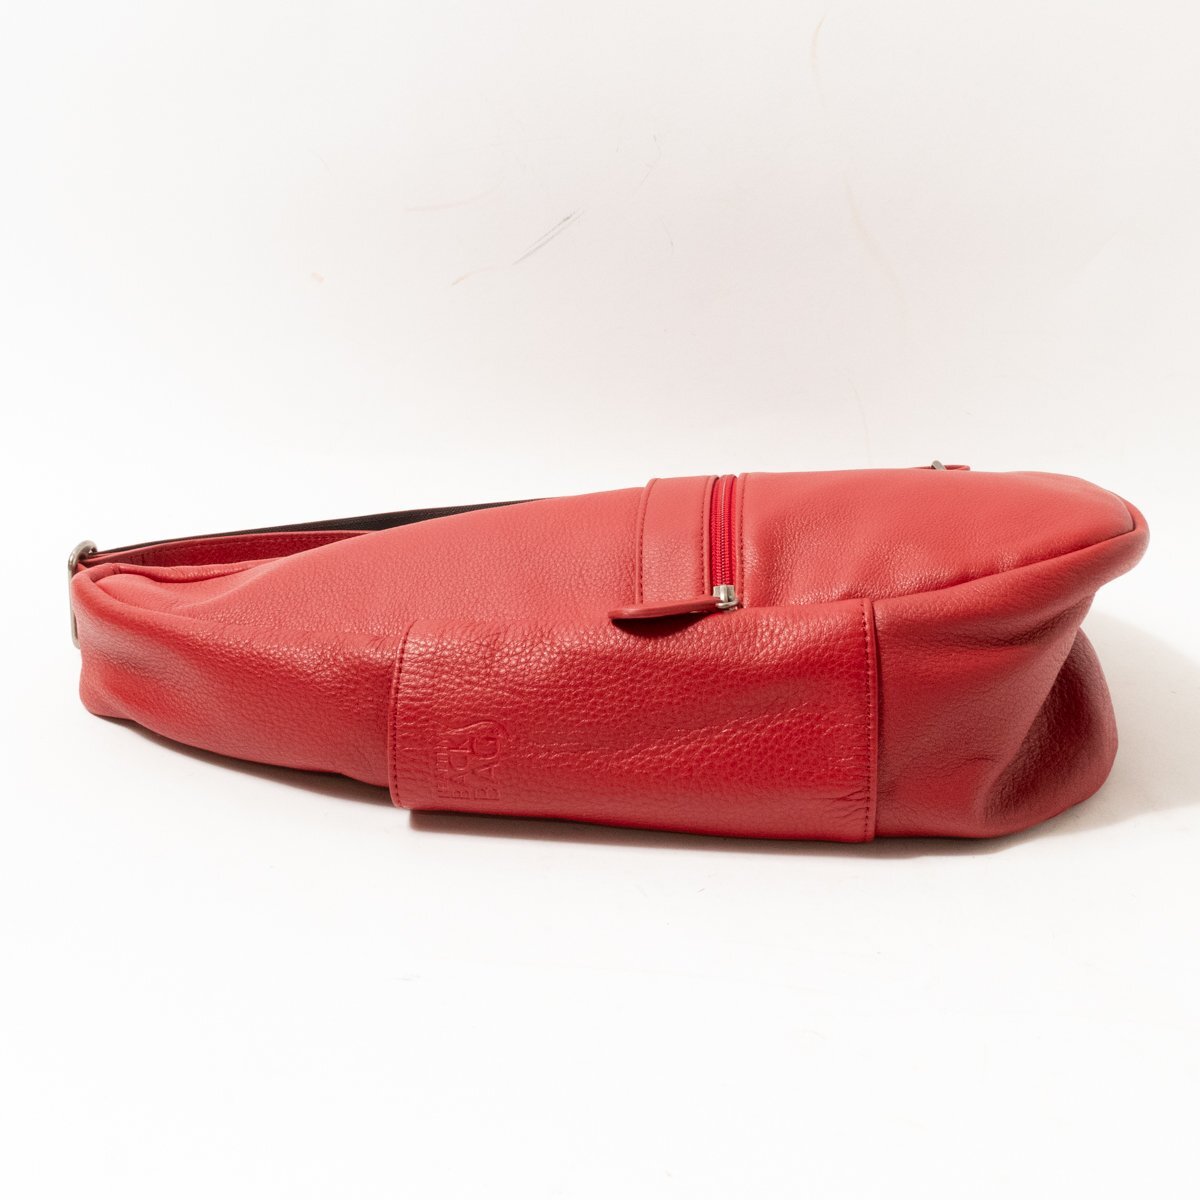 [1 иен старт ]The Healthy Back Bag здоровый задний сумка HBB Leather Chili S 5303-CL сумка "body" кожа натуральная кожа красный casual сумка 